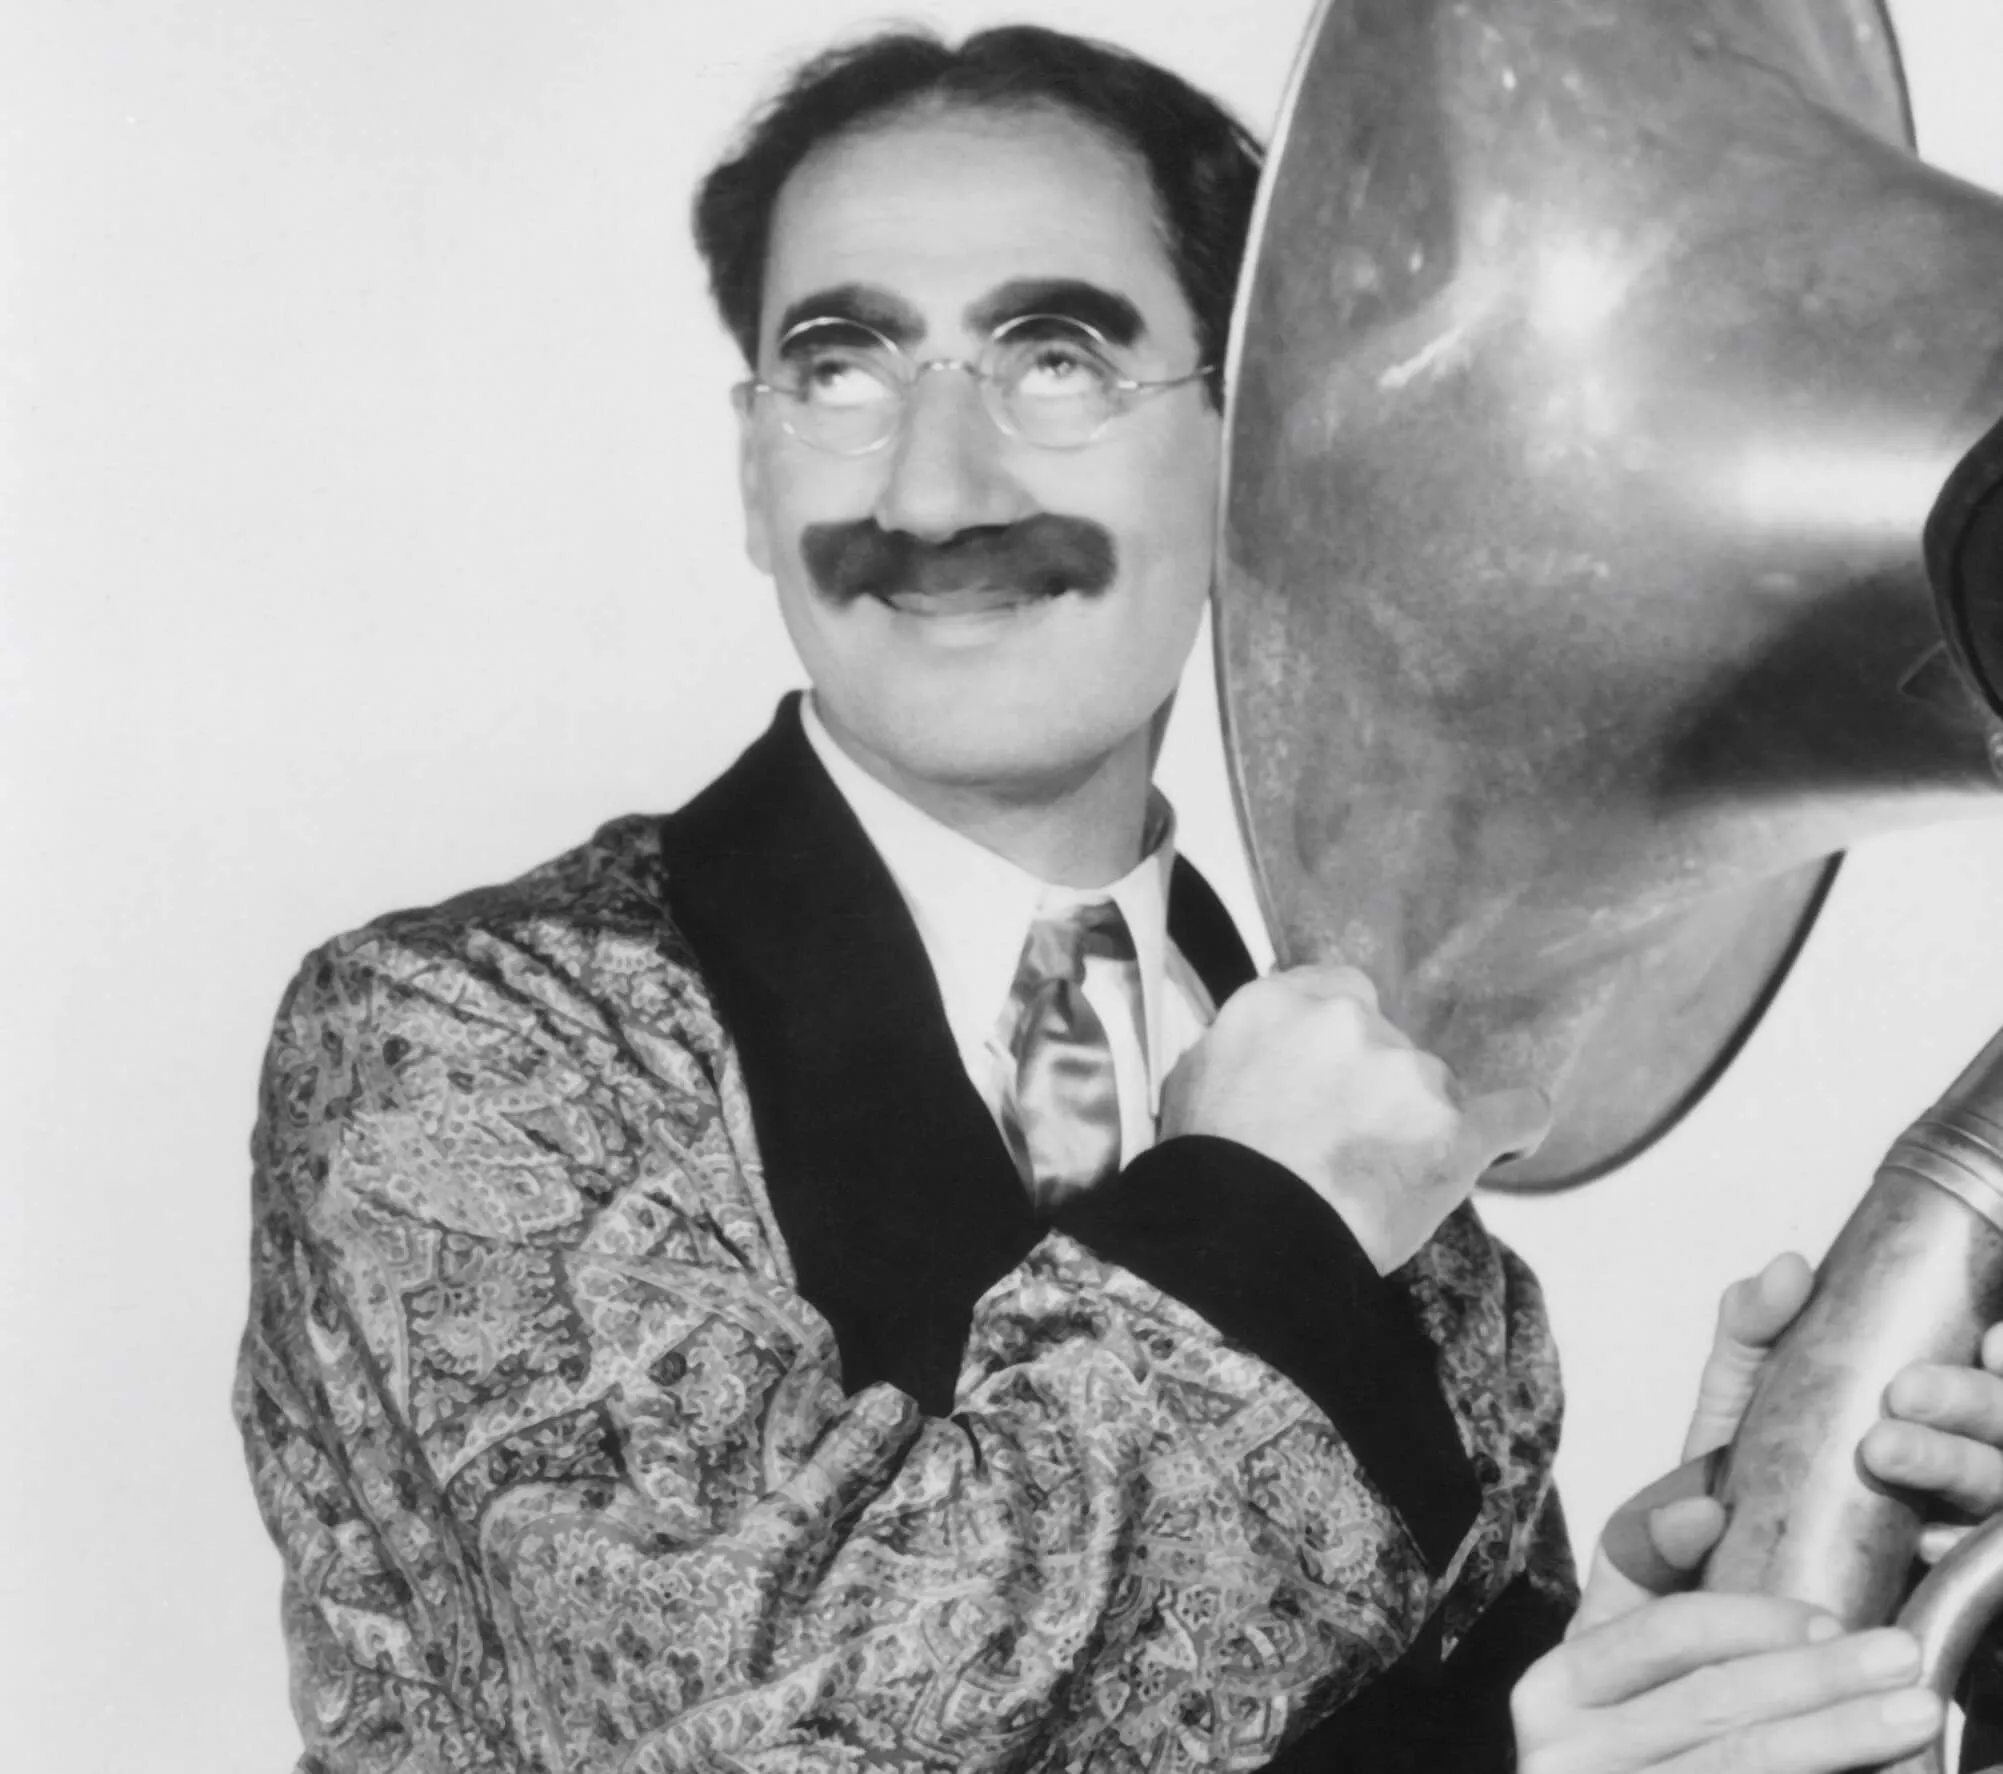 Groucho Marx with a tuba